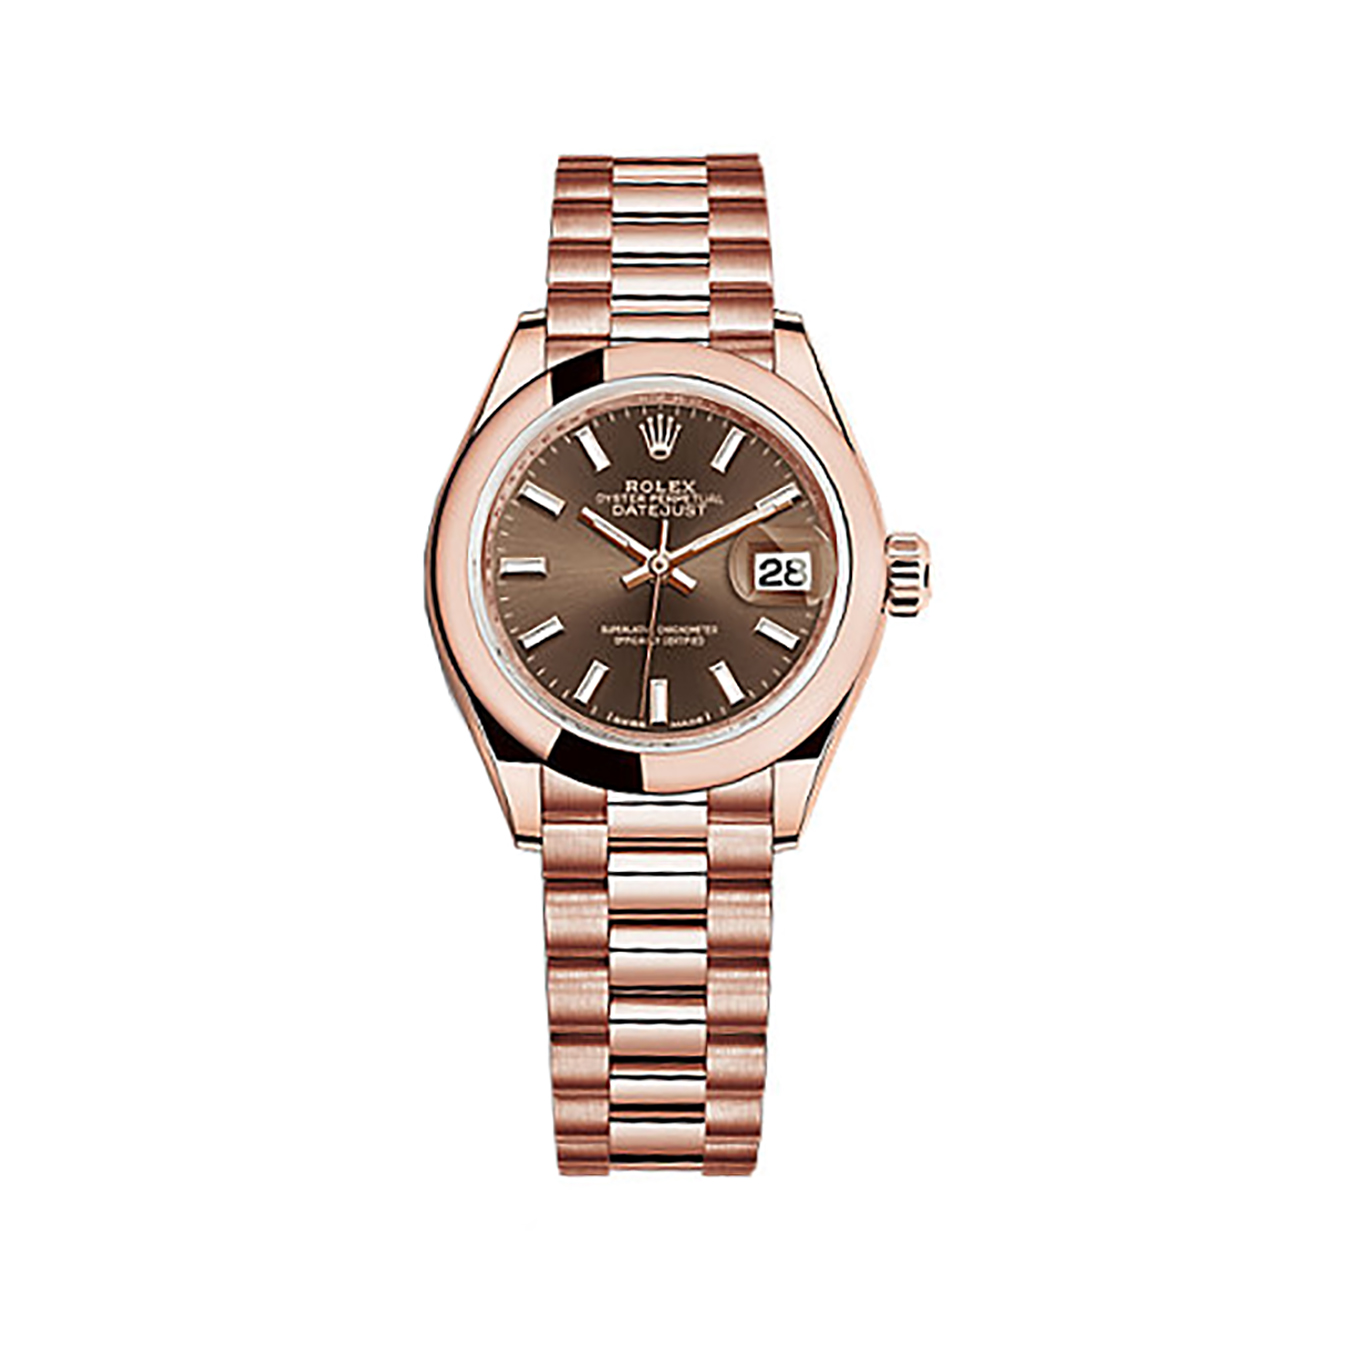 Lady-Datejust 28 279165 Rose Gold Watch (Chocolate)